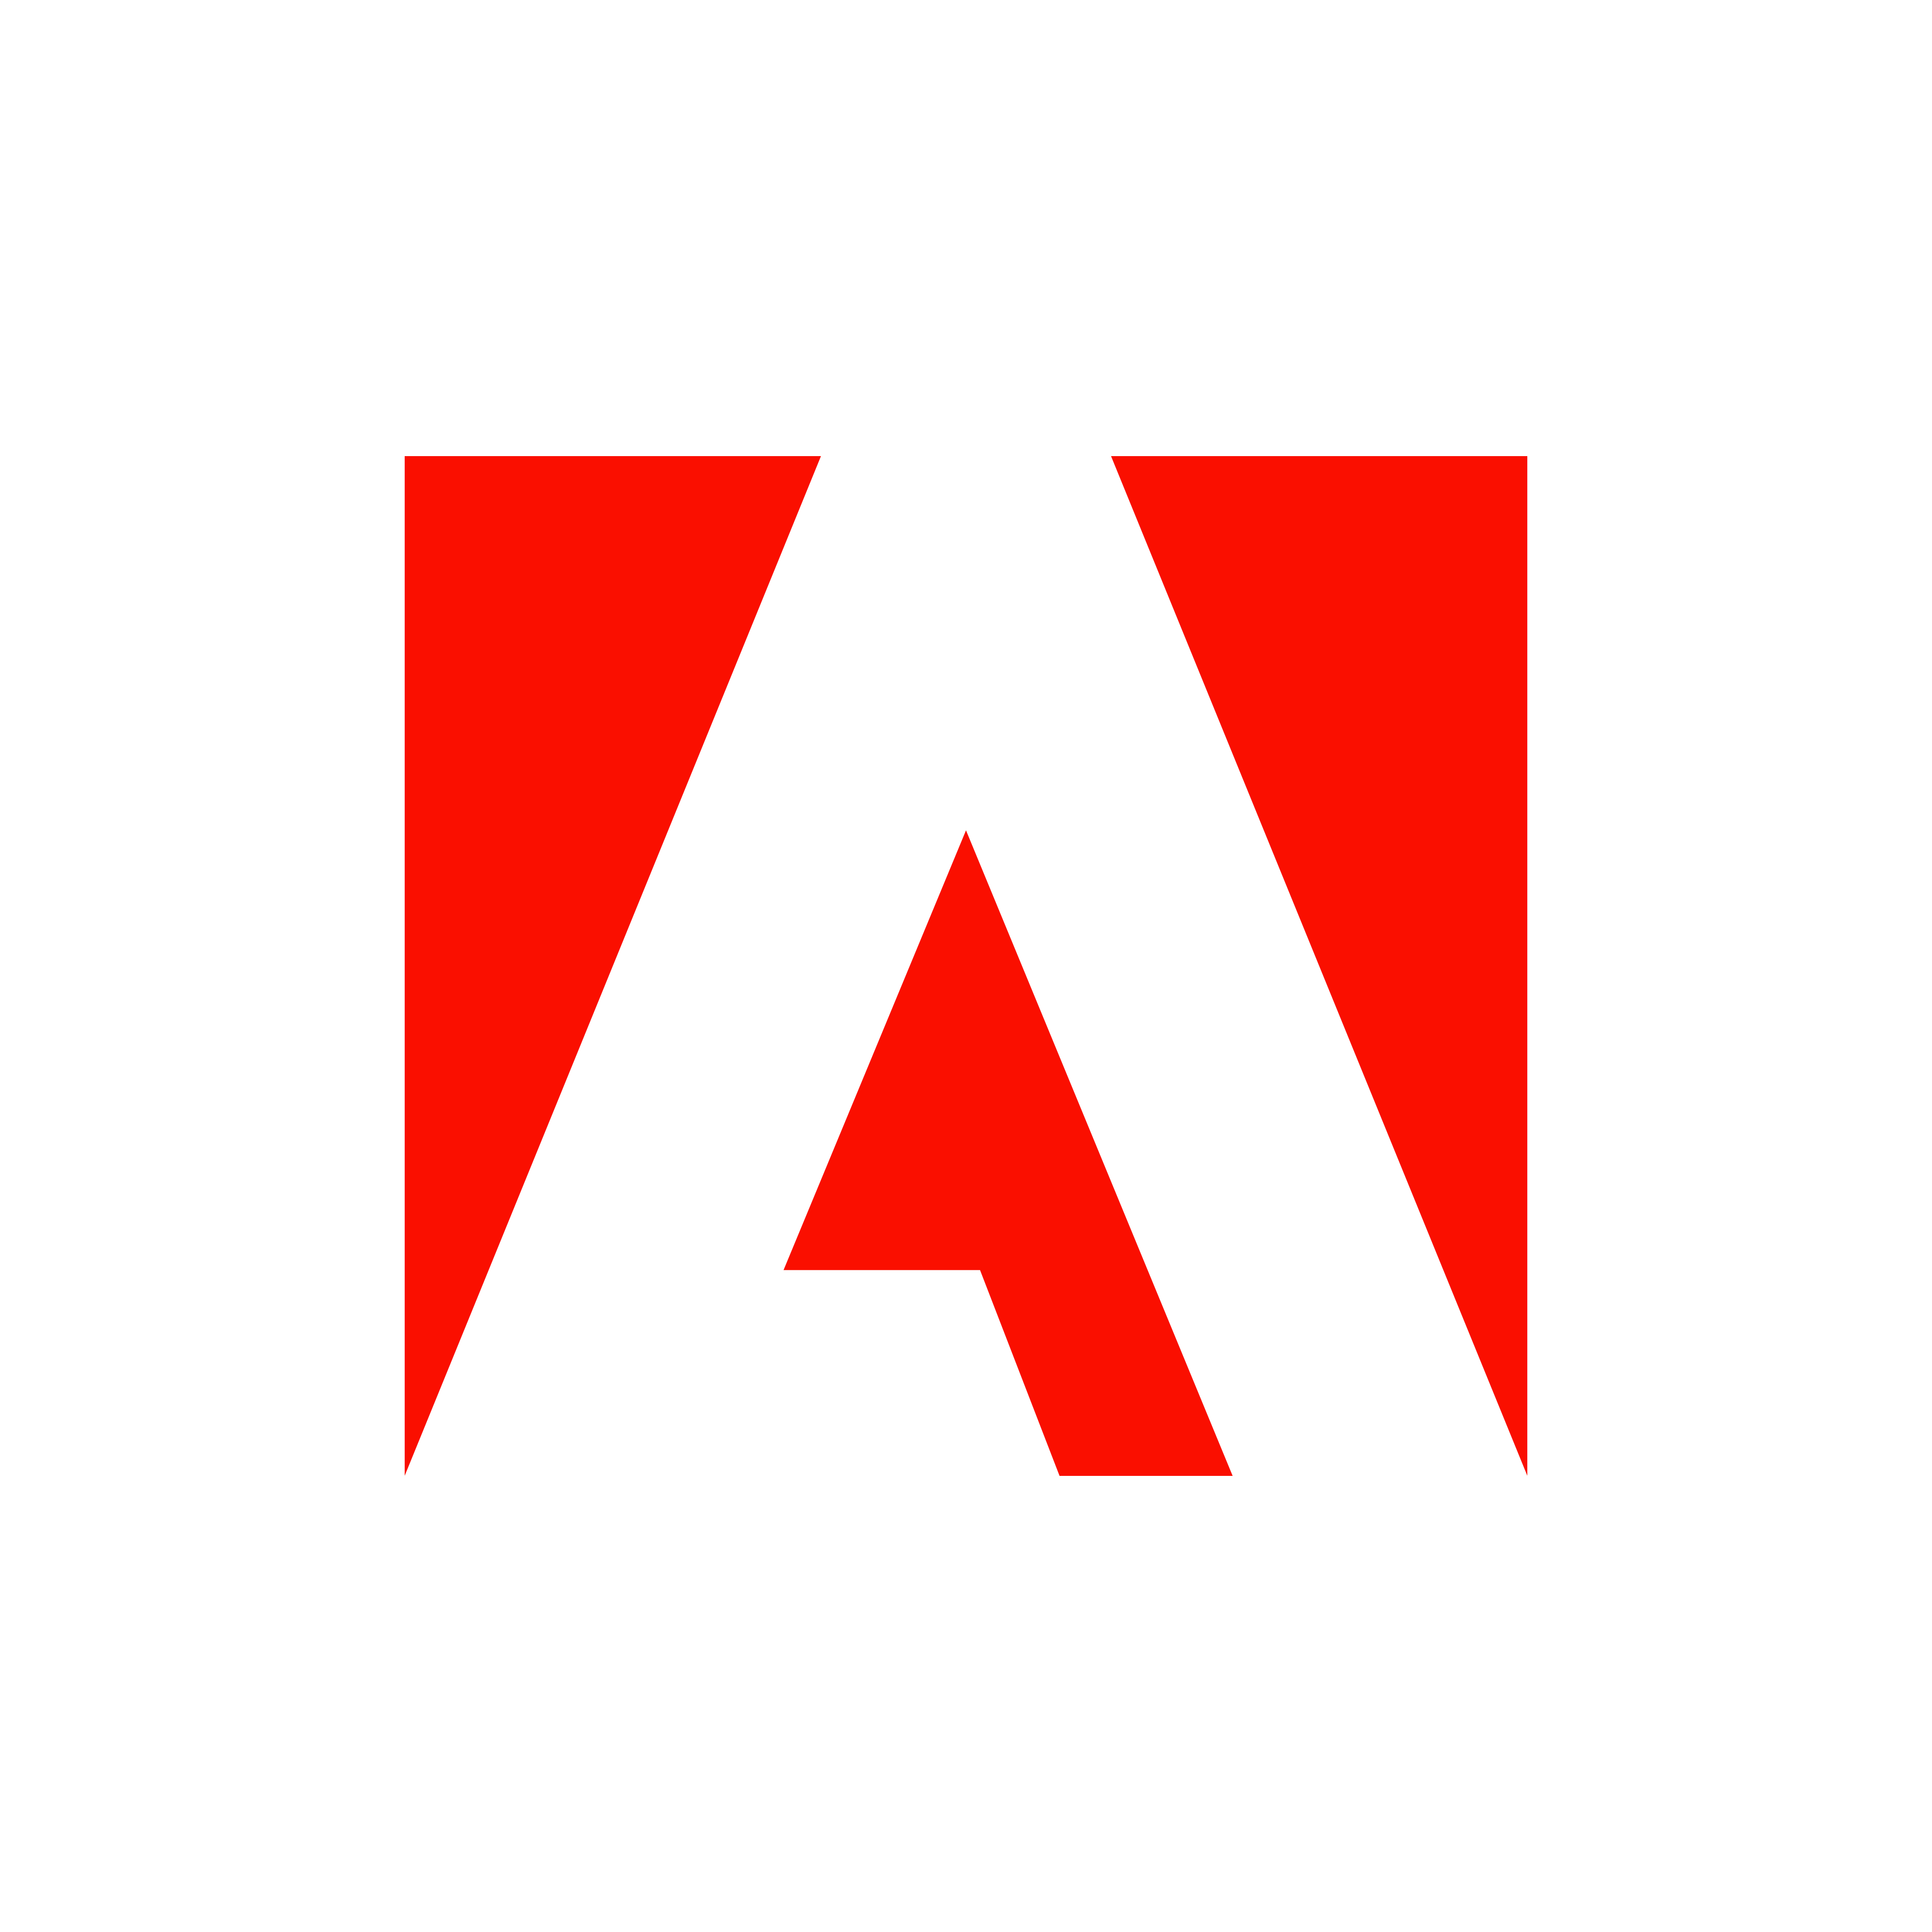 Лого adobe. Adobe logo PNG. Красный логотип. Логотип Adobe Systems. Иконки Adobe.